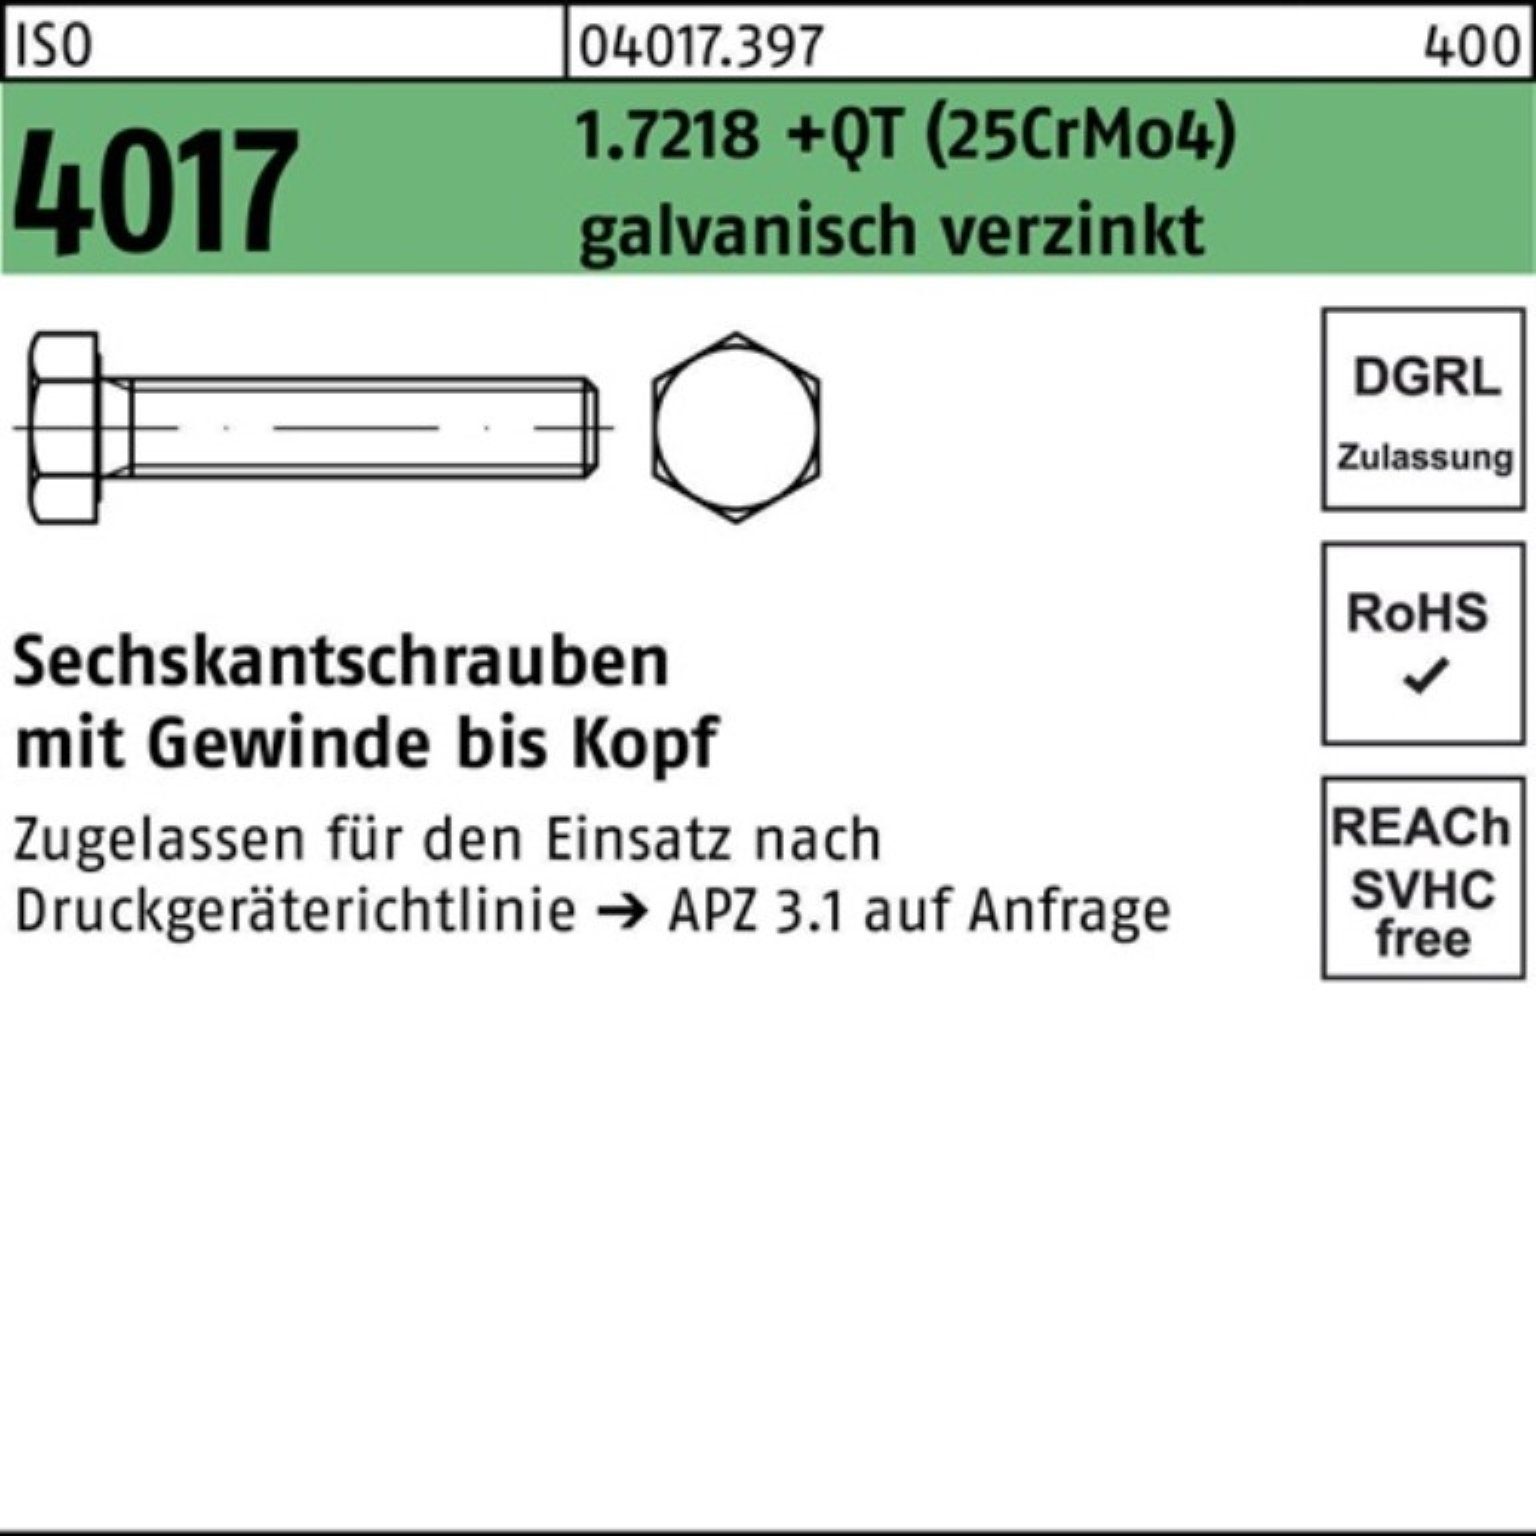 4017 Bufab (25CrMo4) g Sechskantschraube 100er +QT 1.7218 ISO VG Pack M24x85 Sechskantschraube